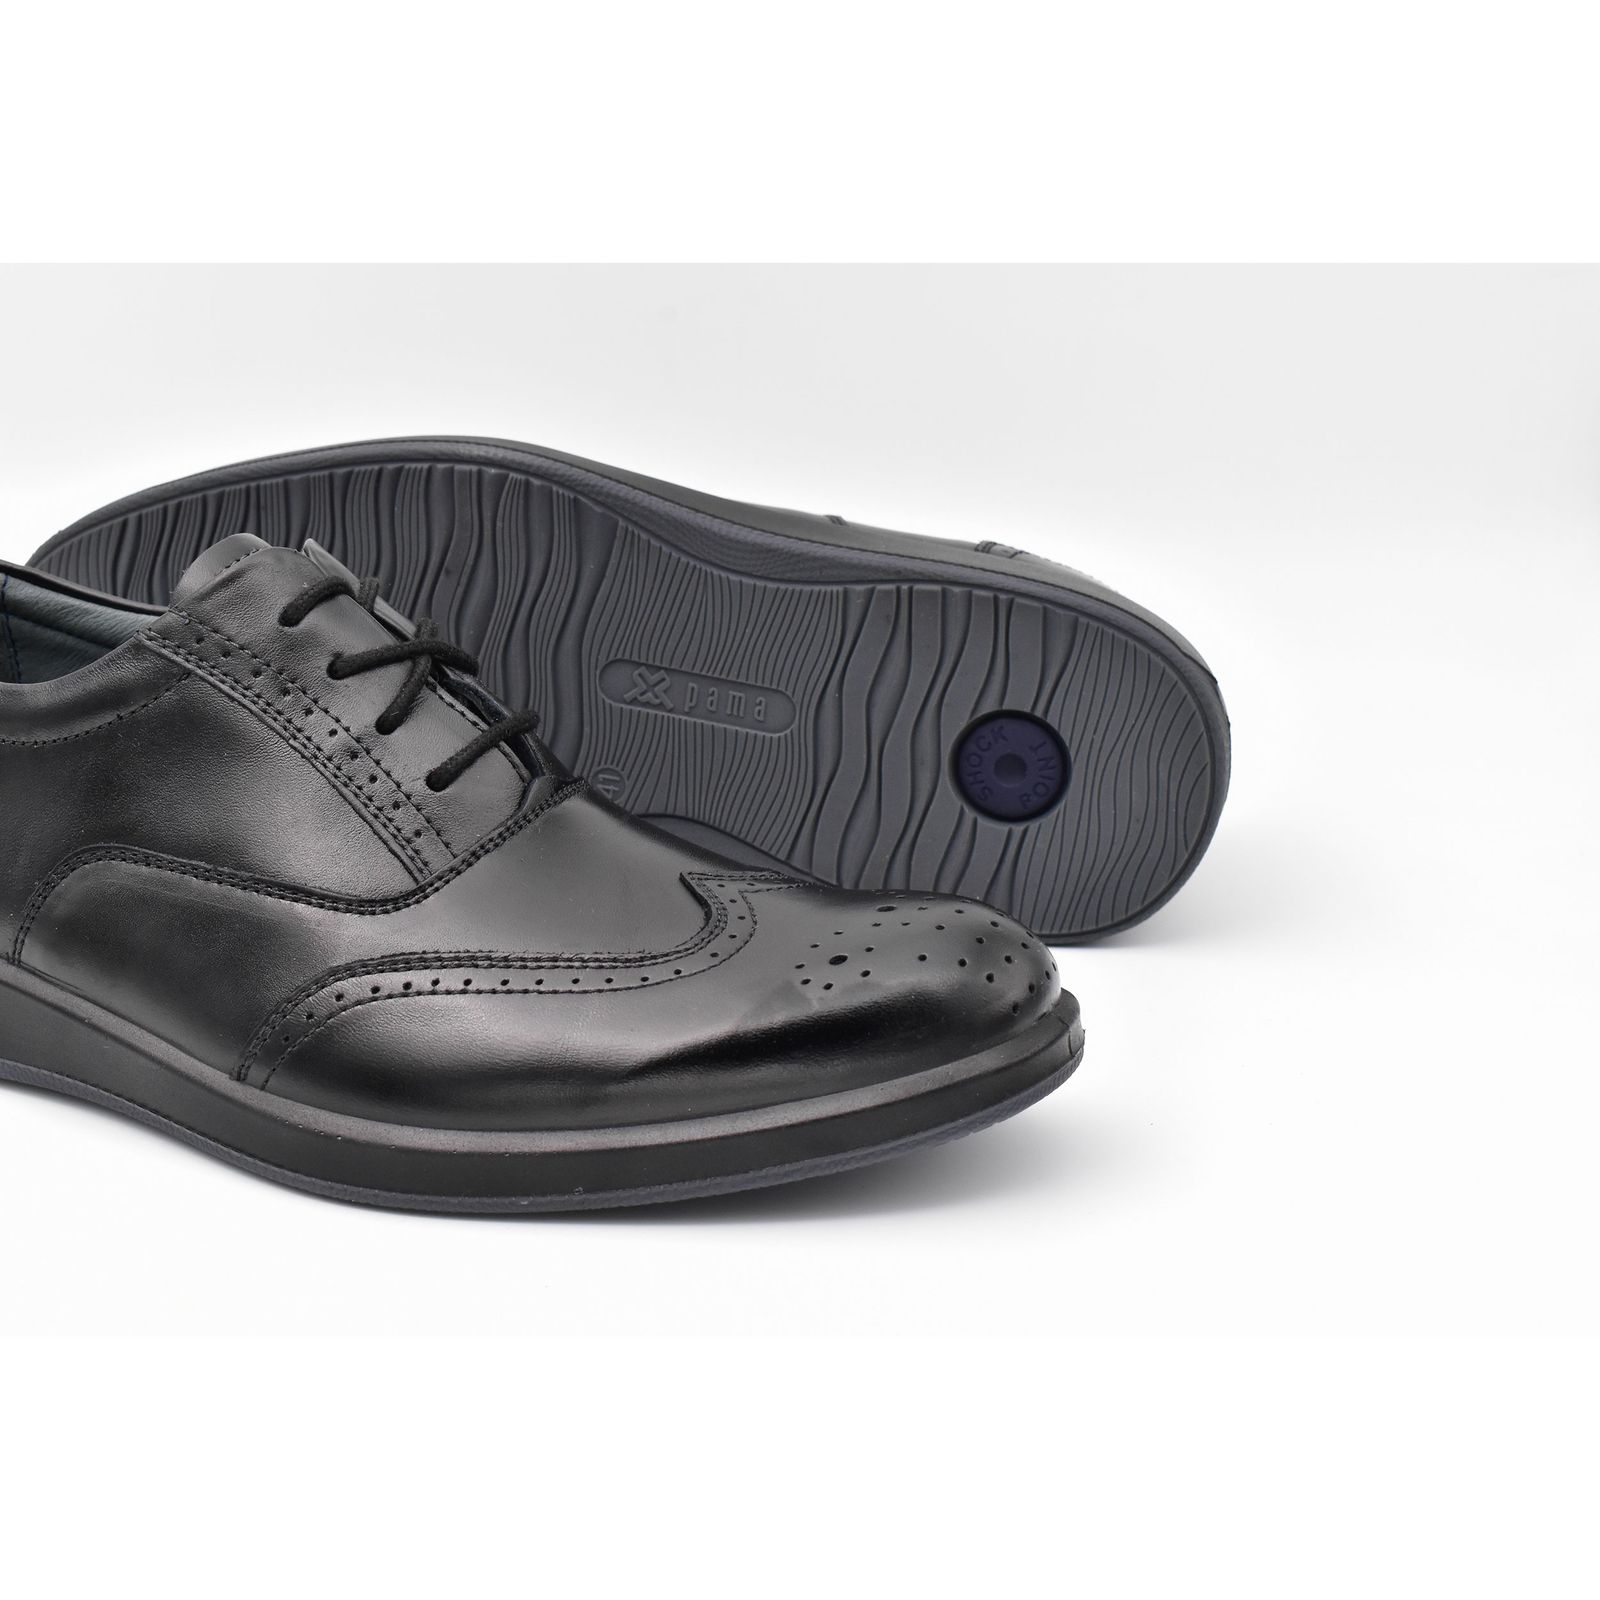 کفش روزمره مردانه پاما مدل F0 کد G1125 -  - 9